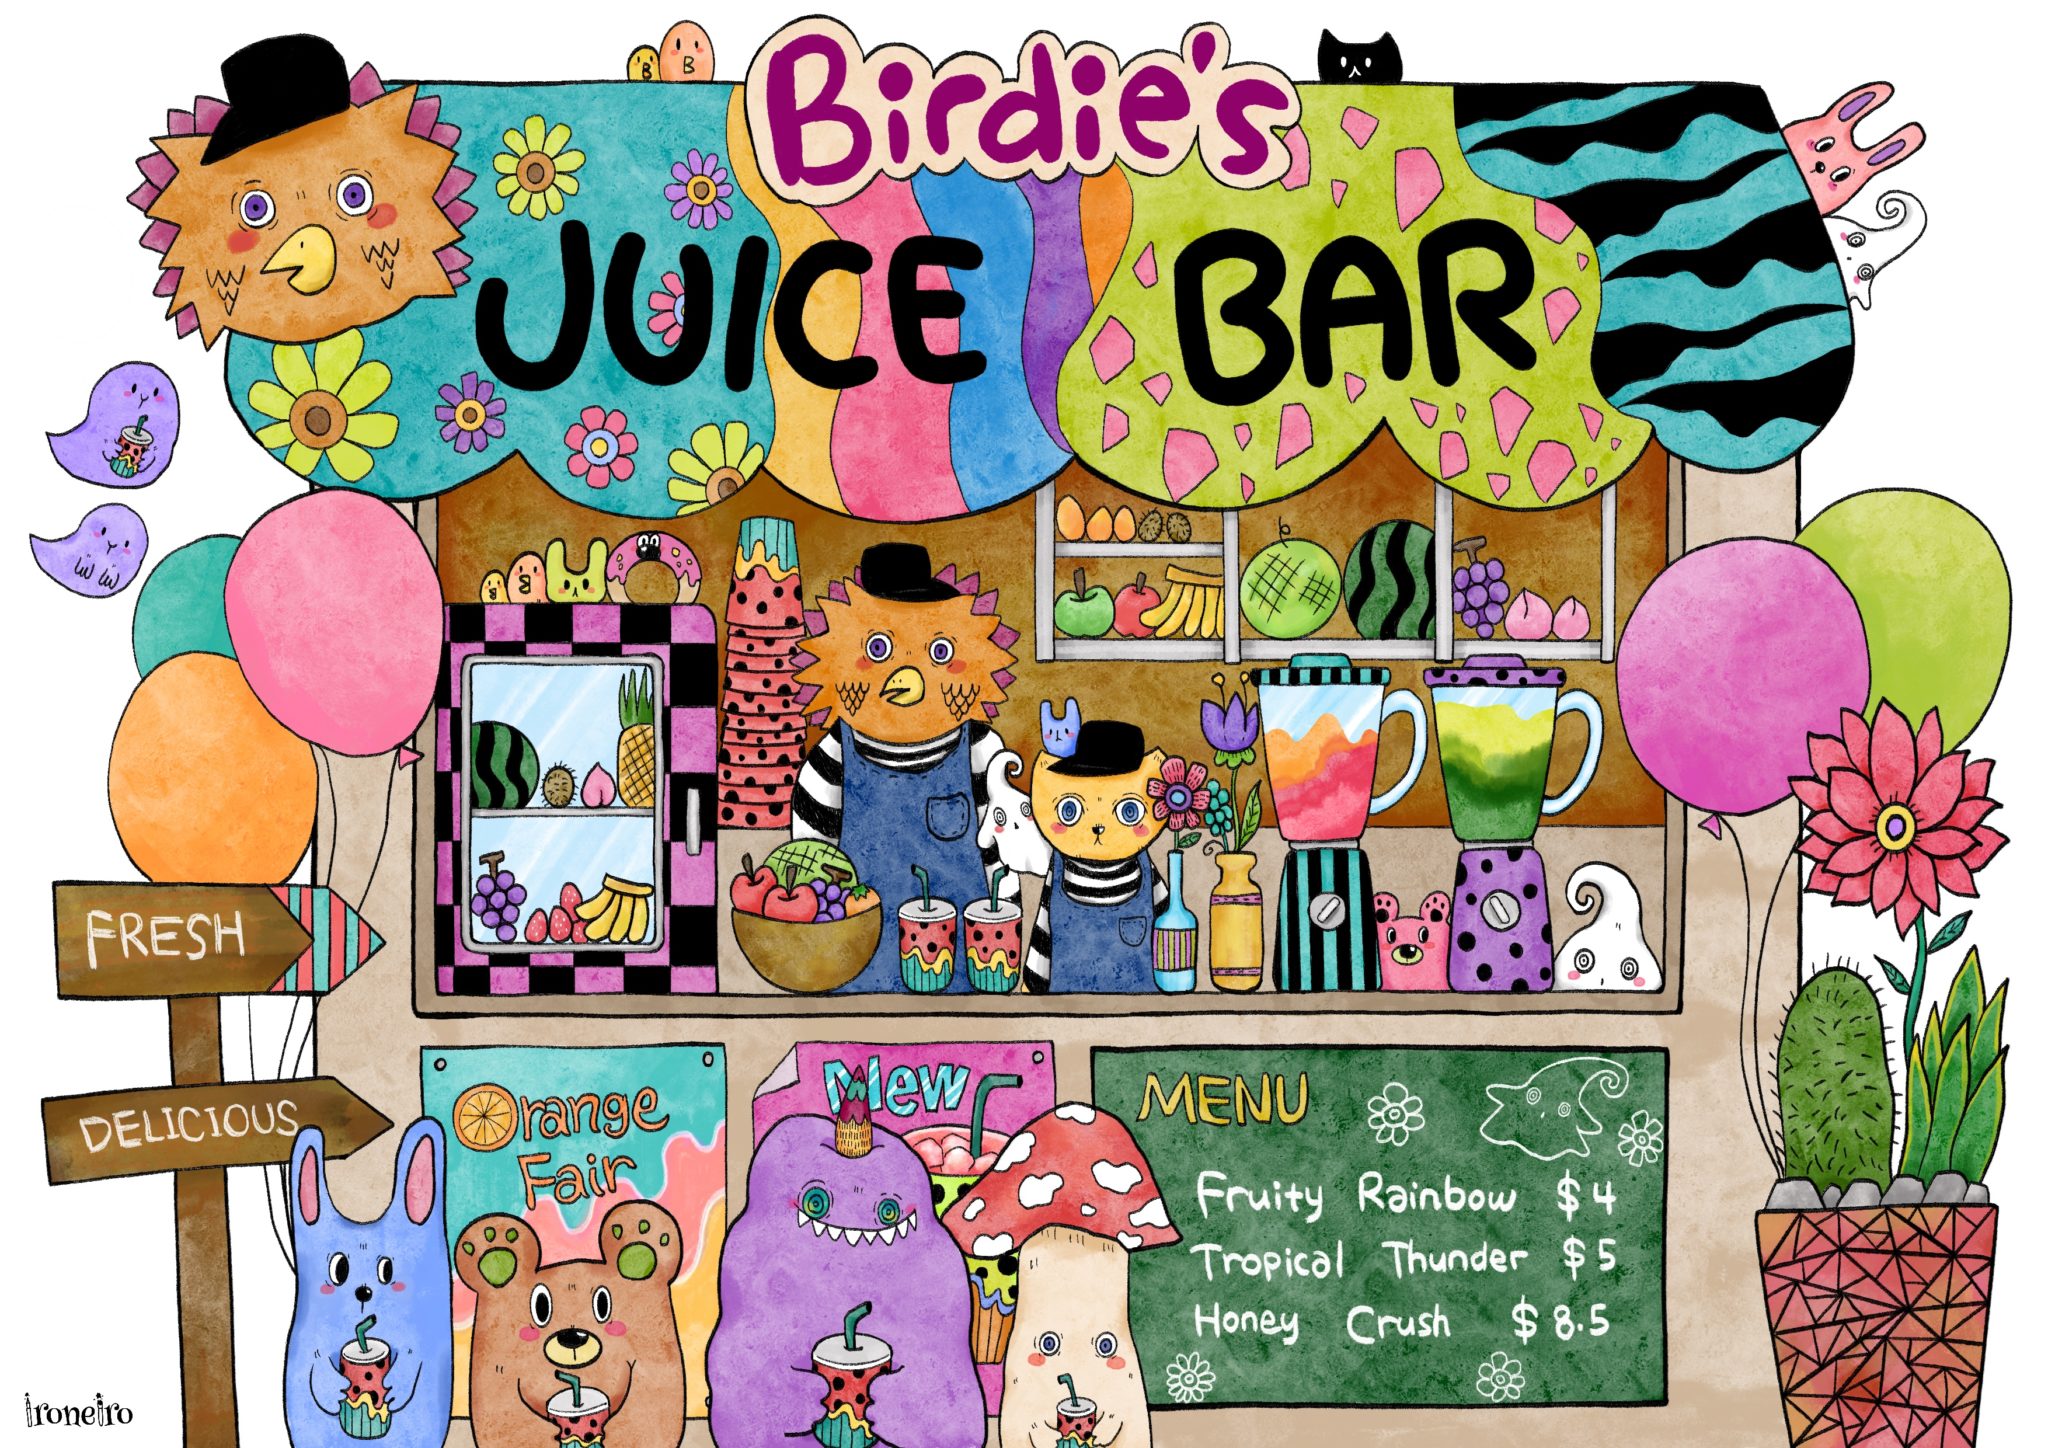 Birdie's JUICE BAR